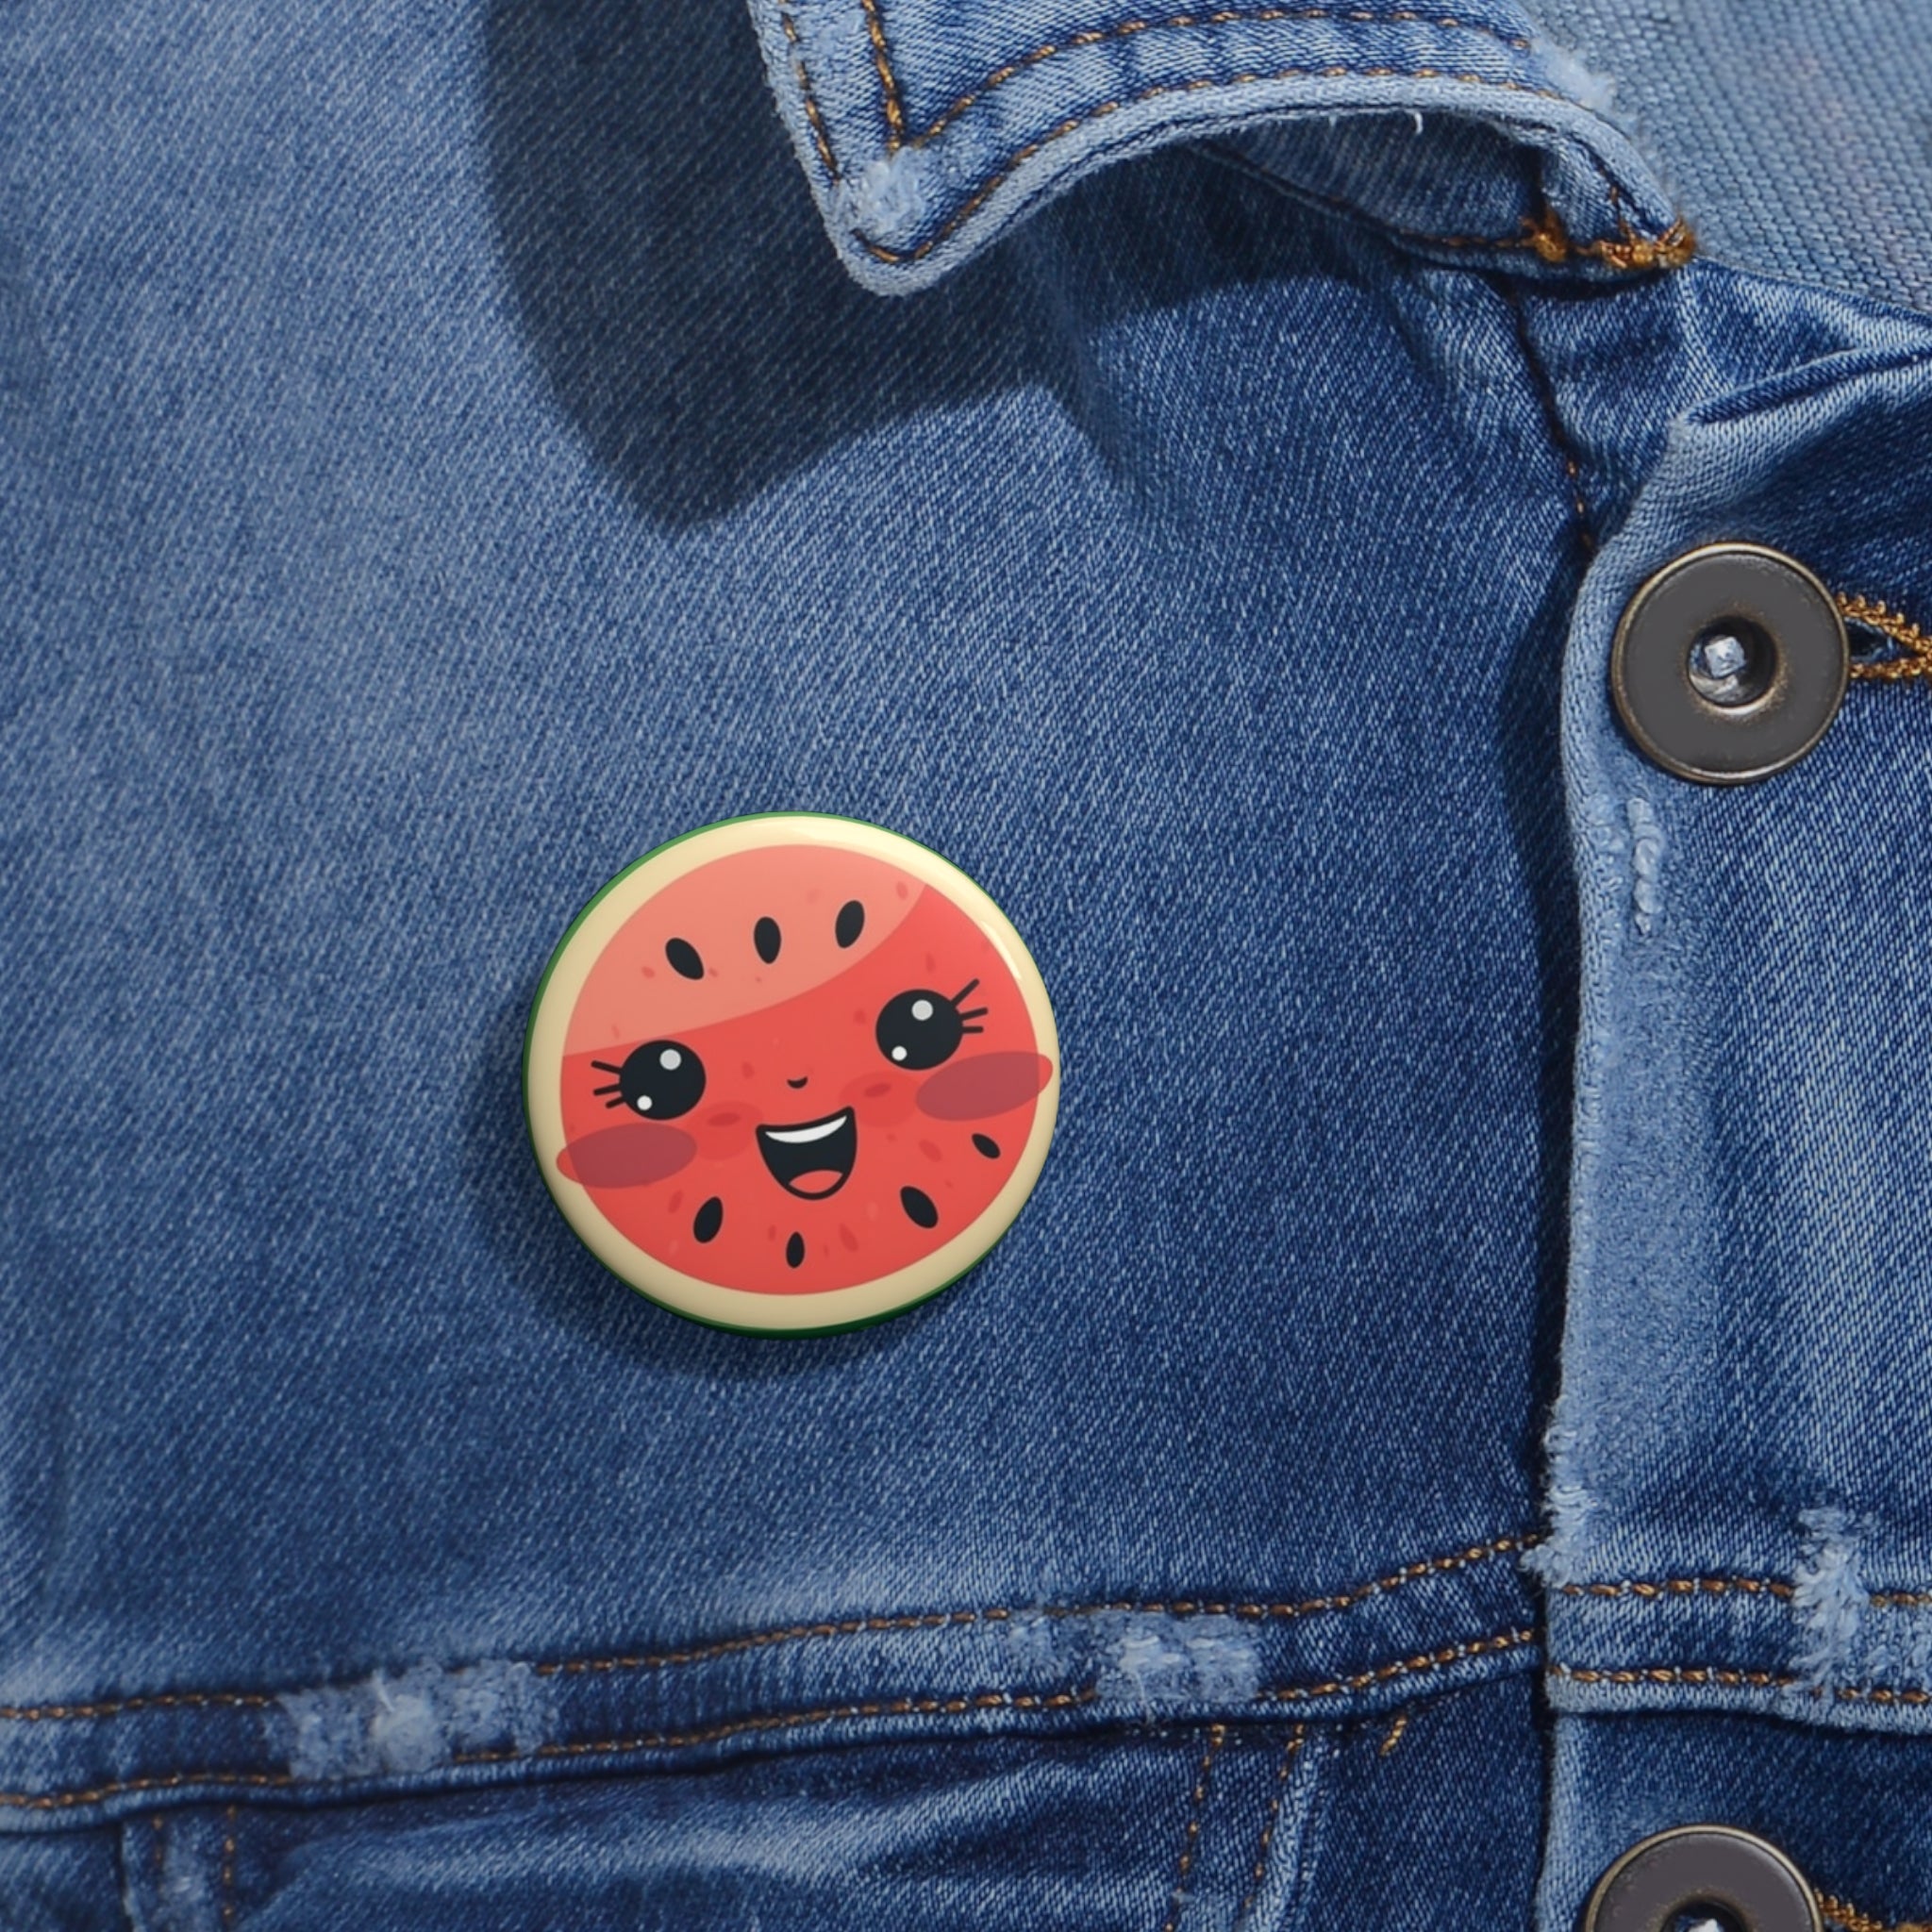 Custom Pin Buttons - Watermelon